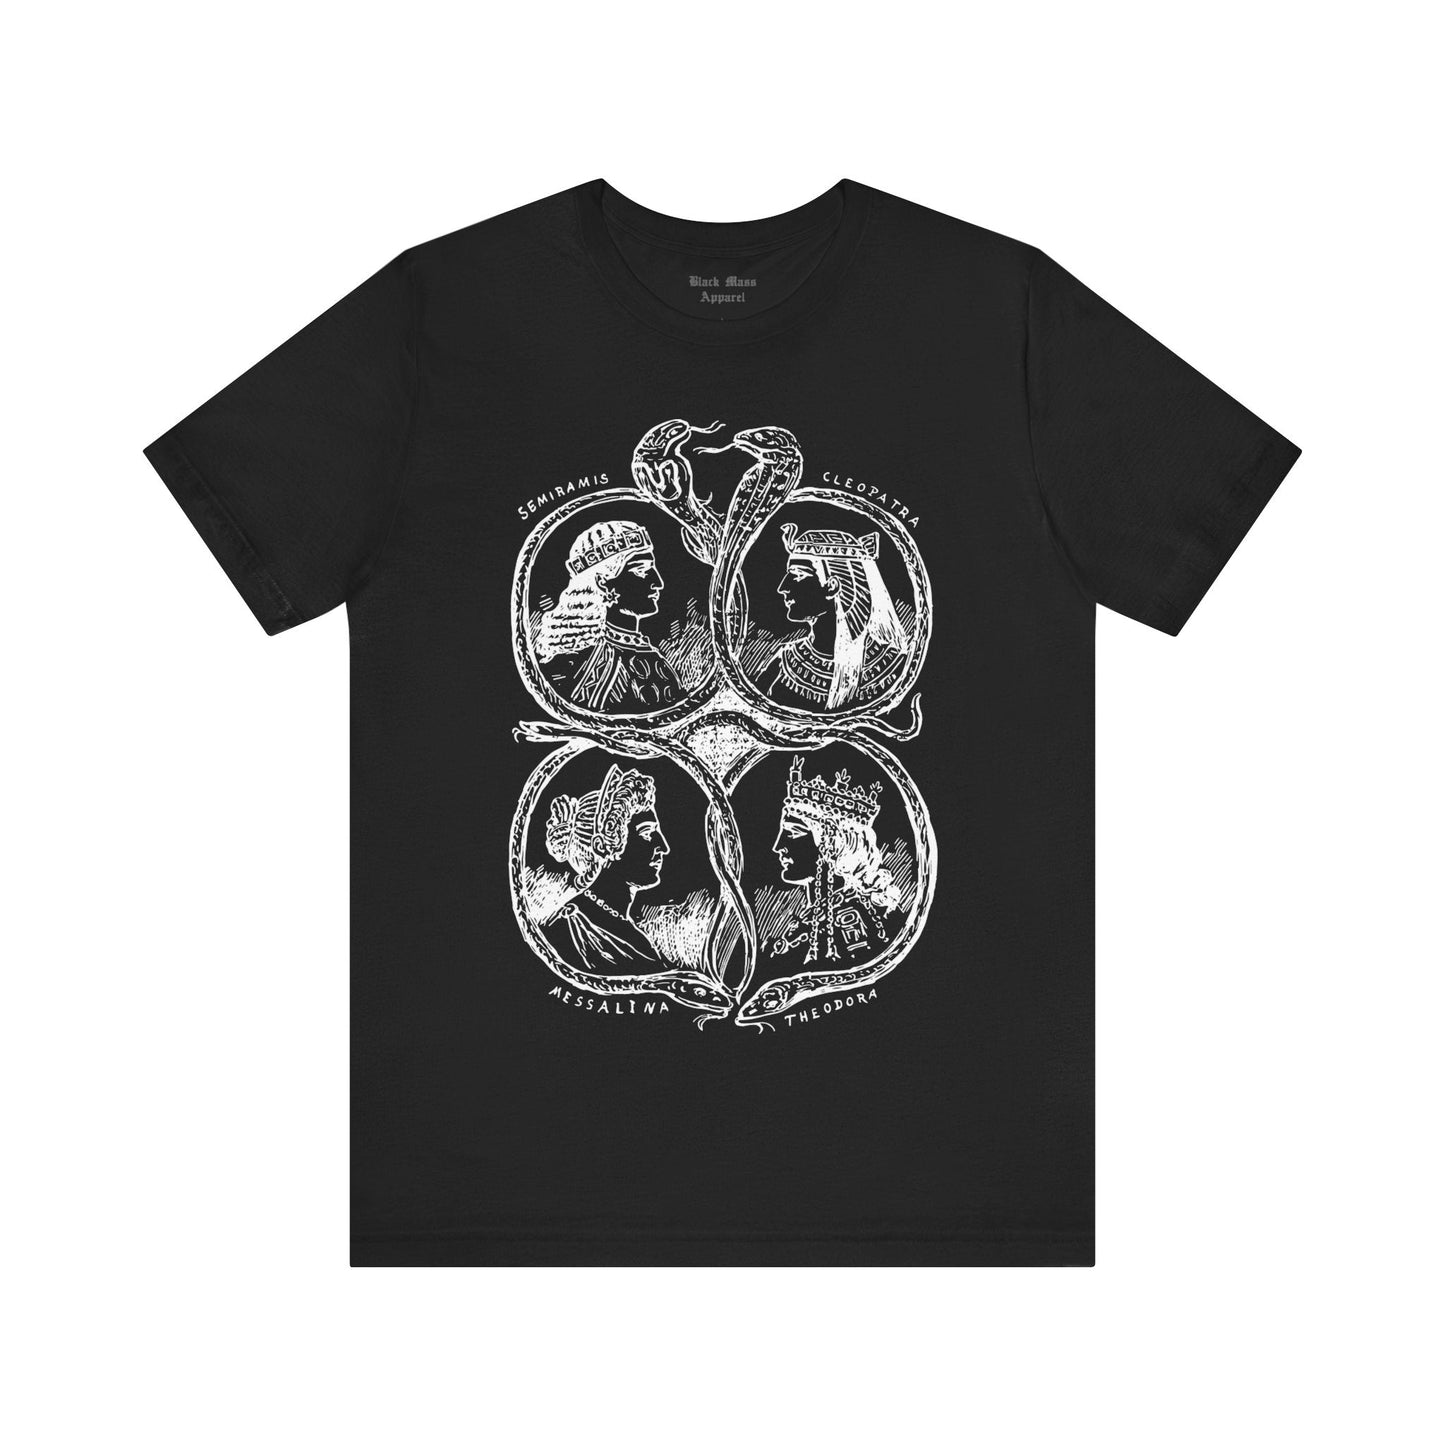 Icons - Black Mass Apparel - T-Shirt